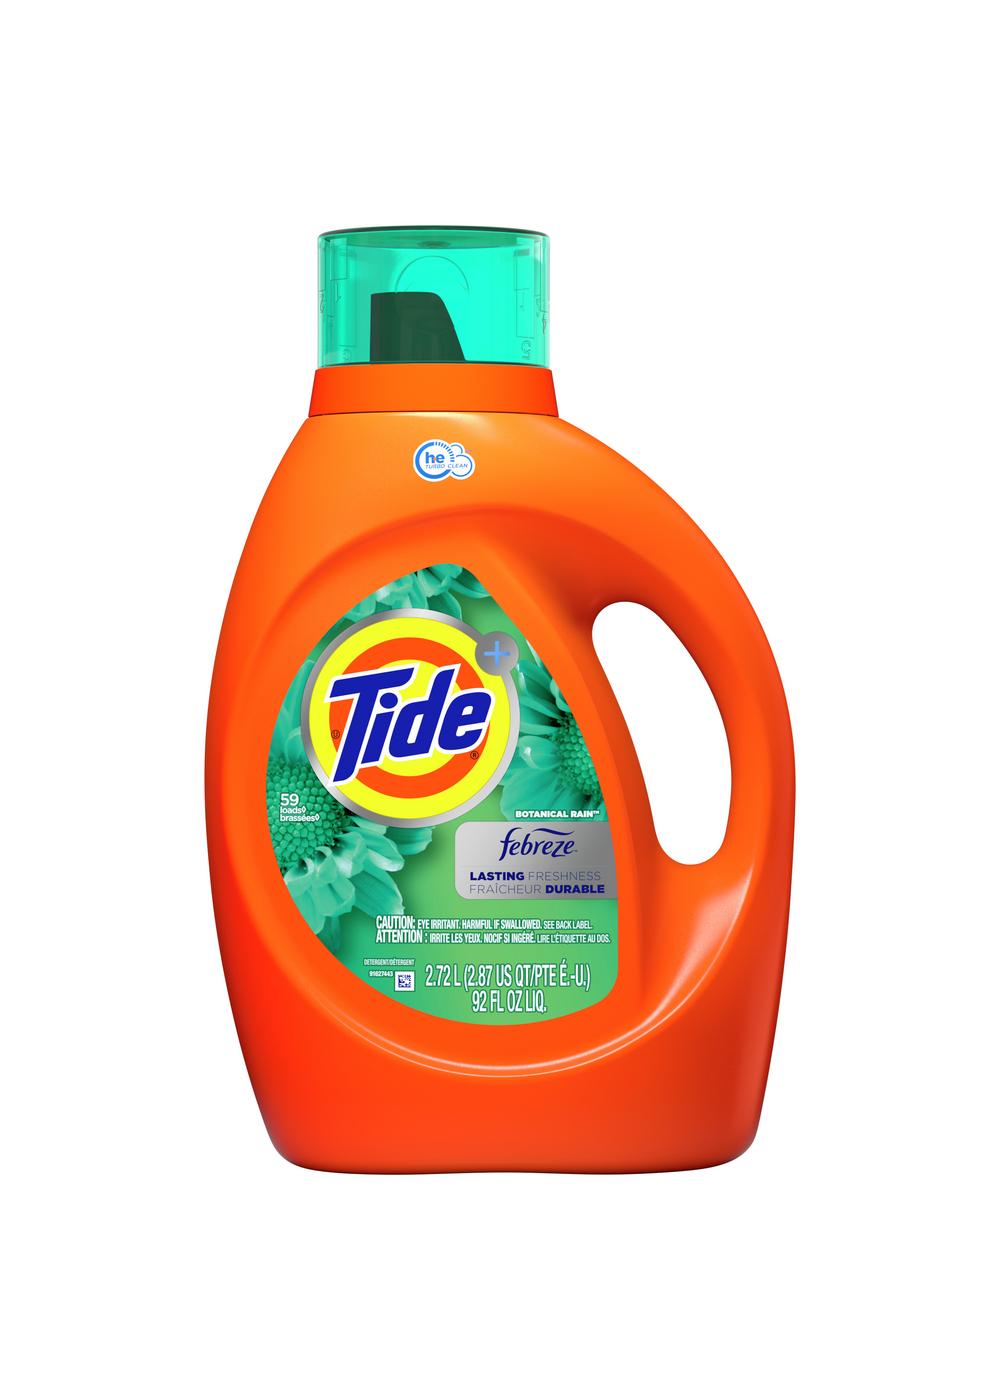 Tide + Febreze HE Turbo Clean Liquid Laundry Detergent, 59 Loads - Botanical Rain; image 11 of 14